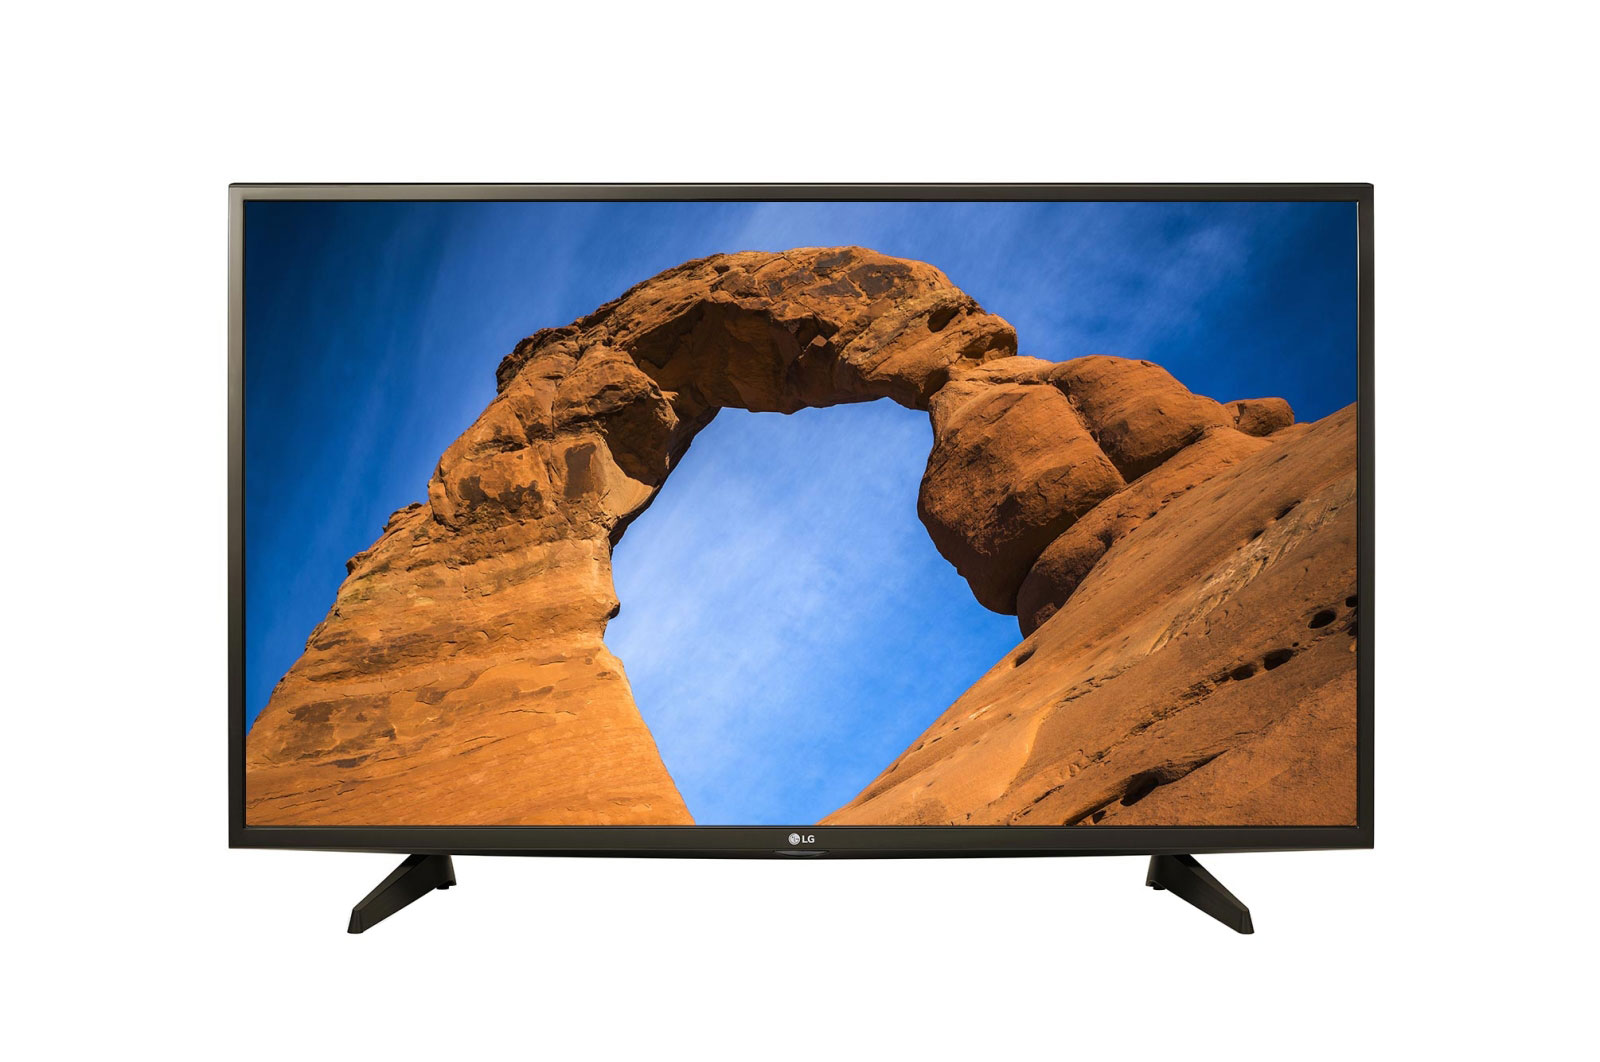 LG 43 Inch Full HD LED TV - 43LK5100PVB